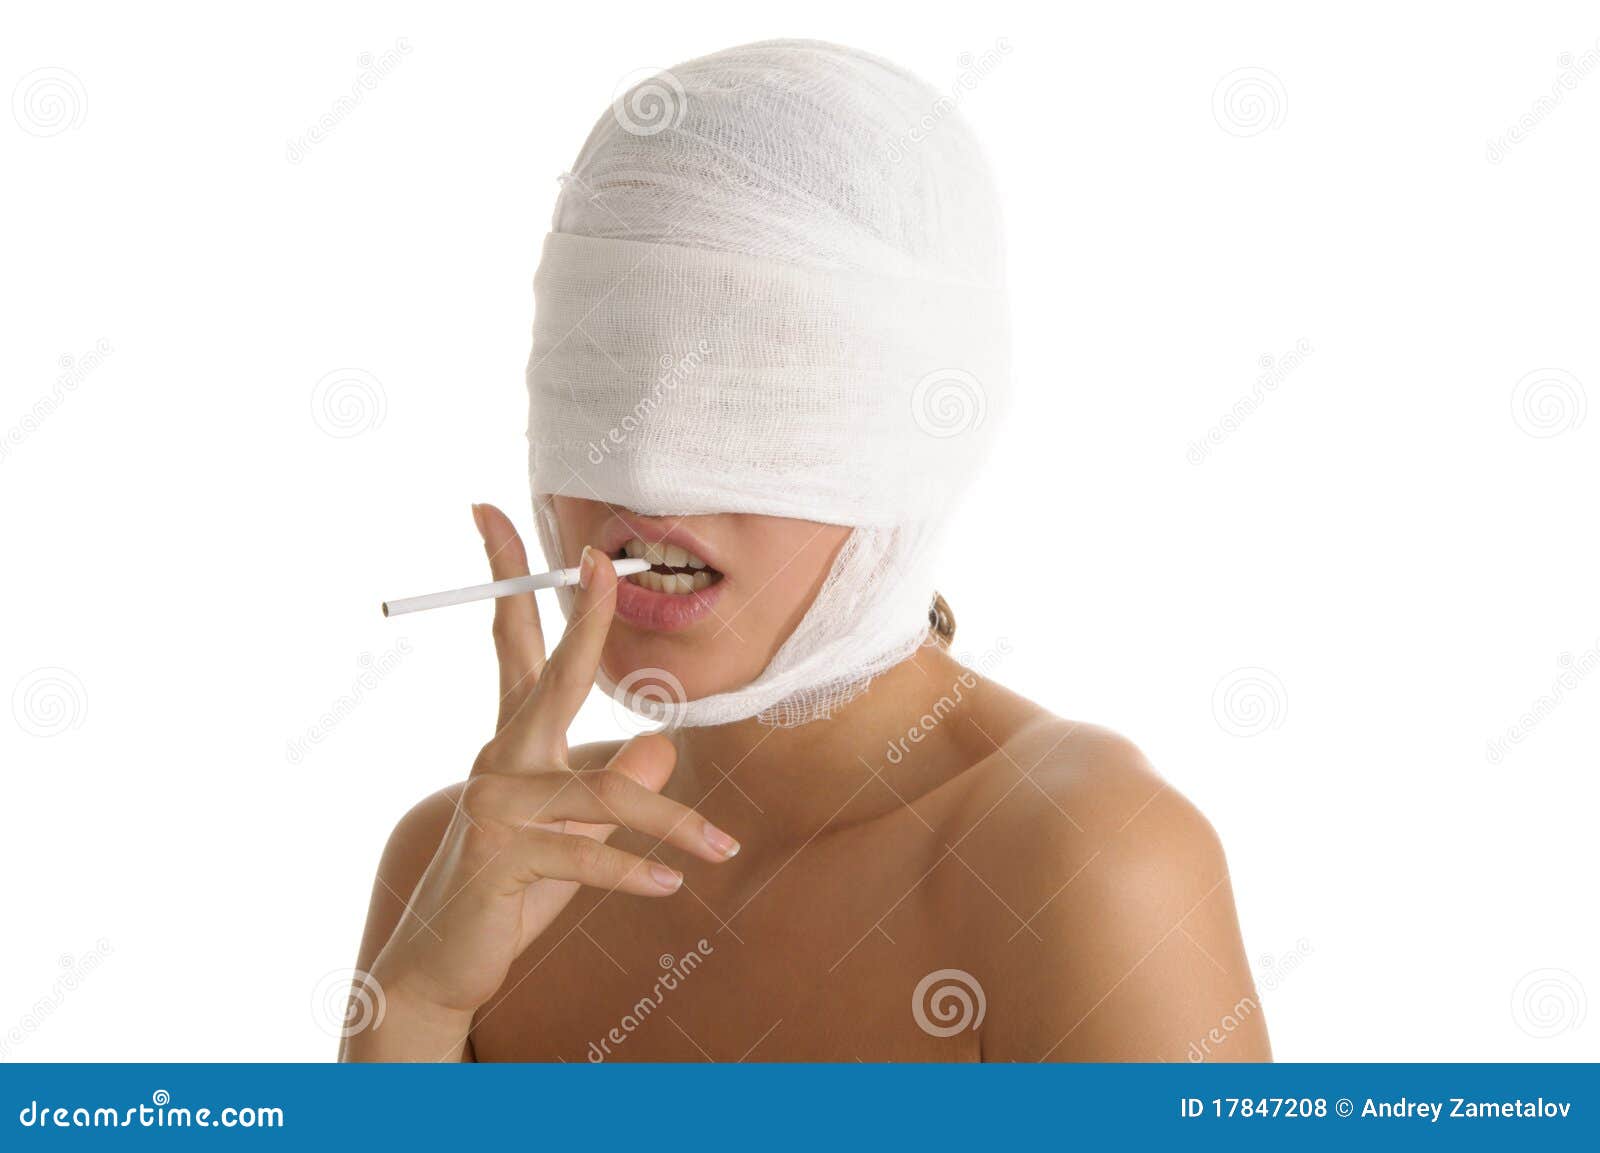 young-woman-bandaged-head-cigaret-17847208.jpg